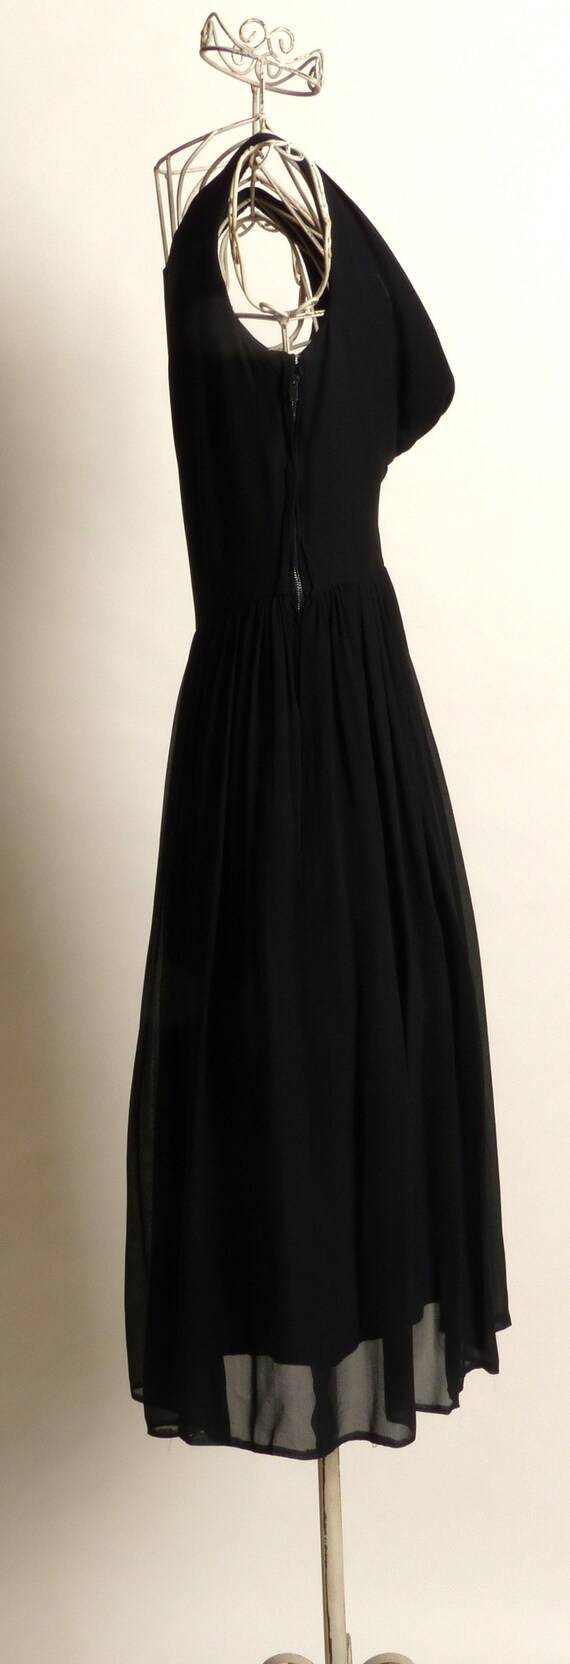 Circa 1950s Suzy Perette Silk Chiffon Black Dress - image 3